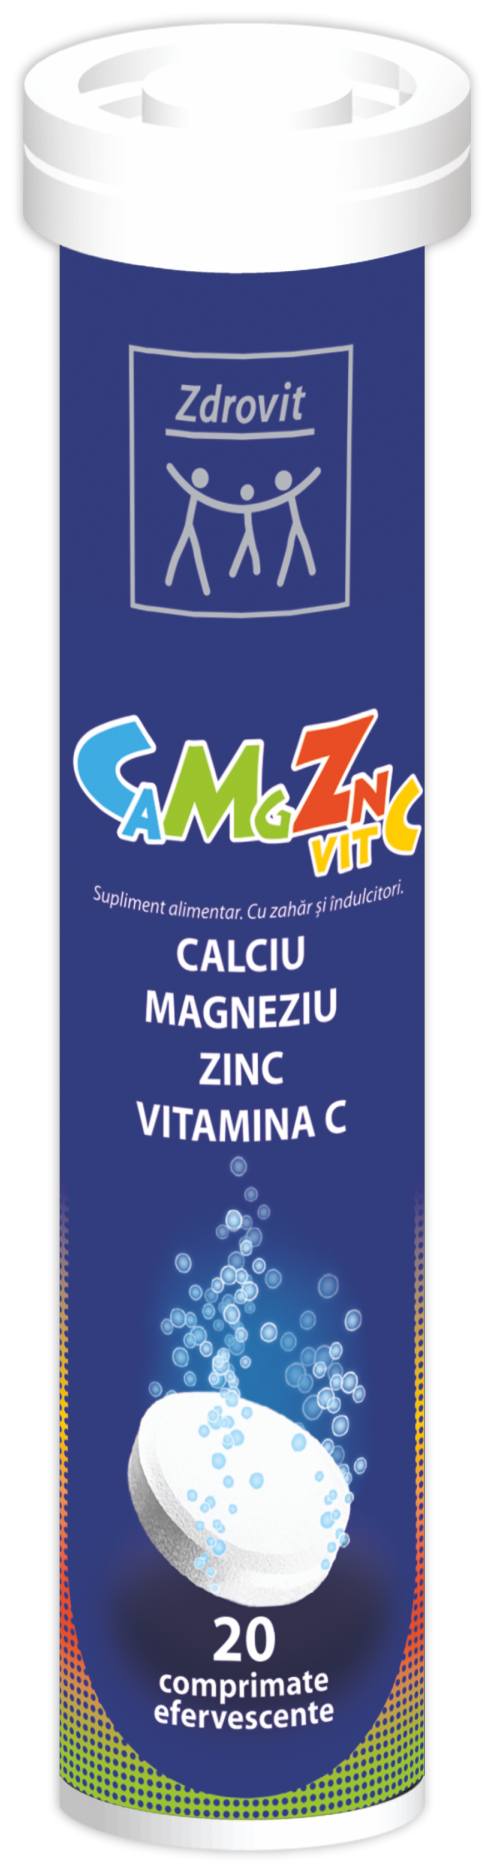 Ca Mg Zn + Vitamina C, 20 comprimate efervescente, Zdrovit